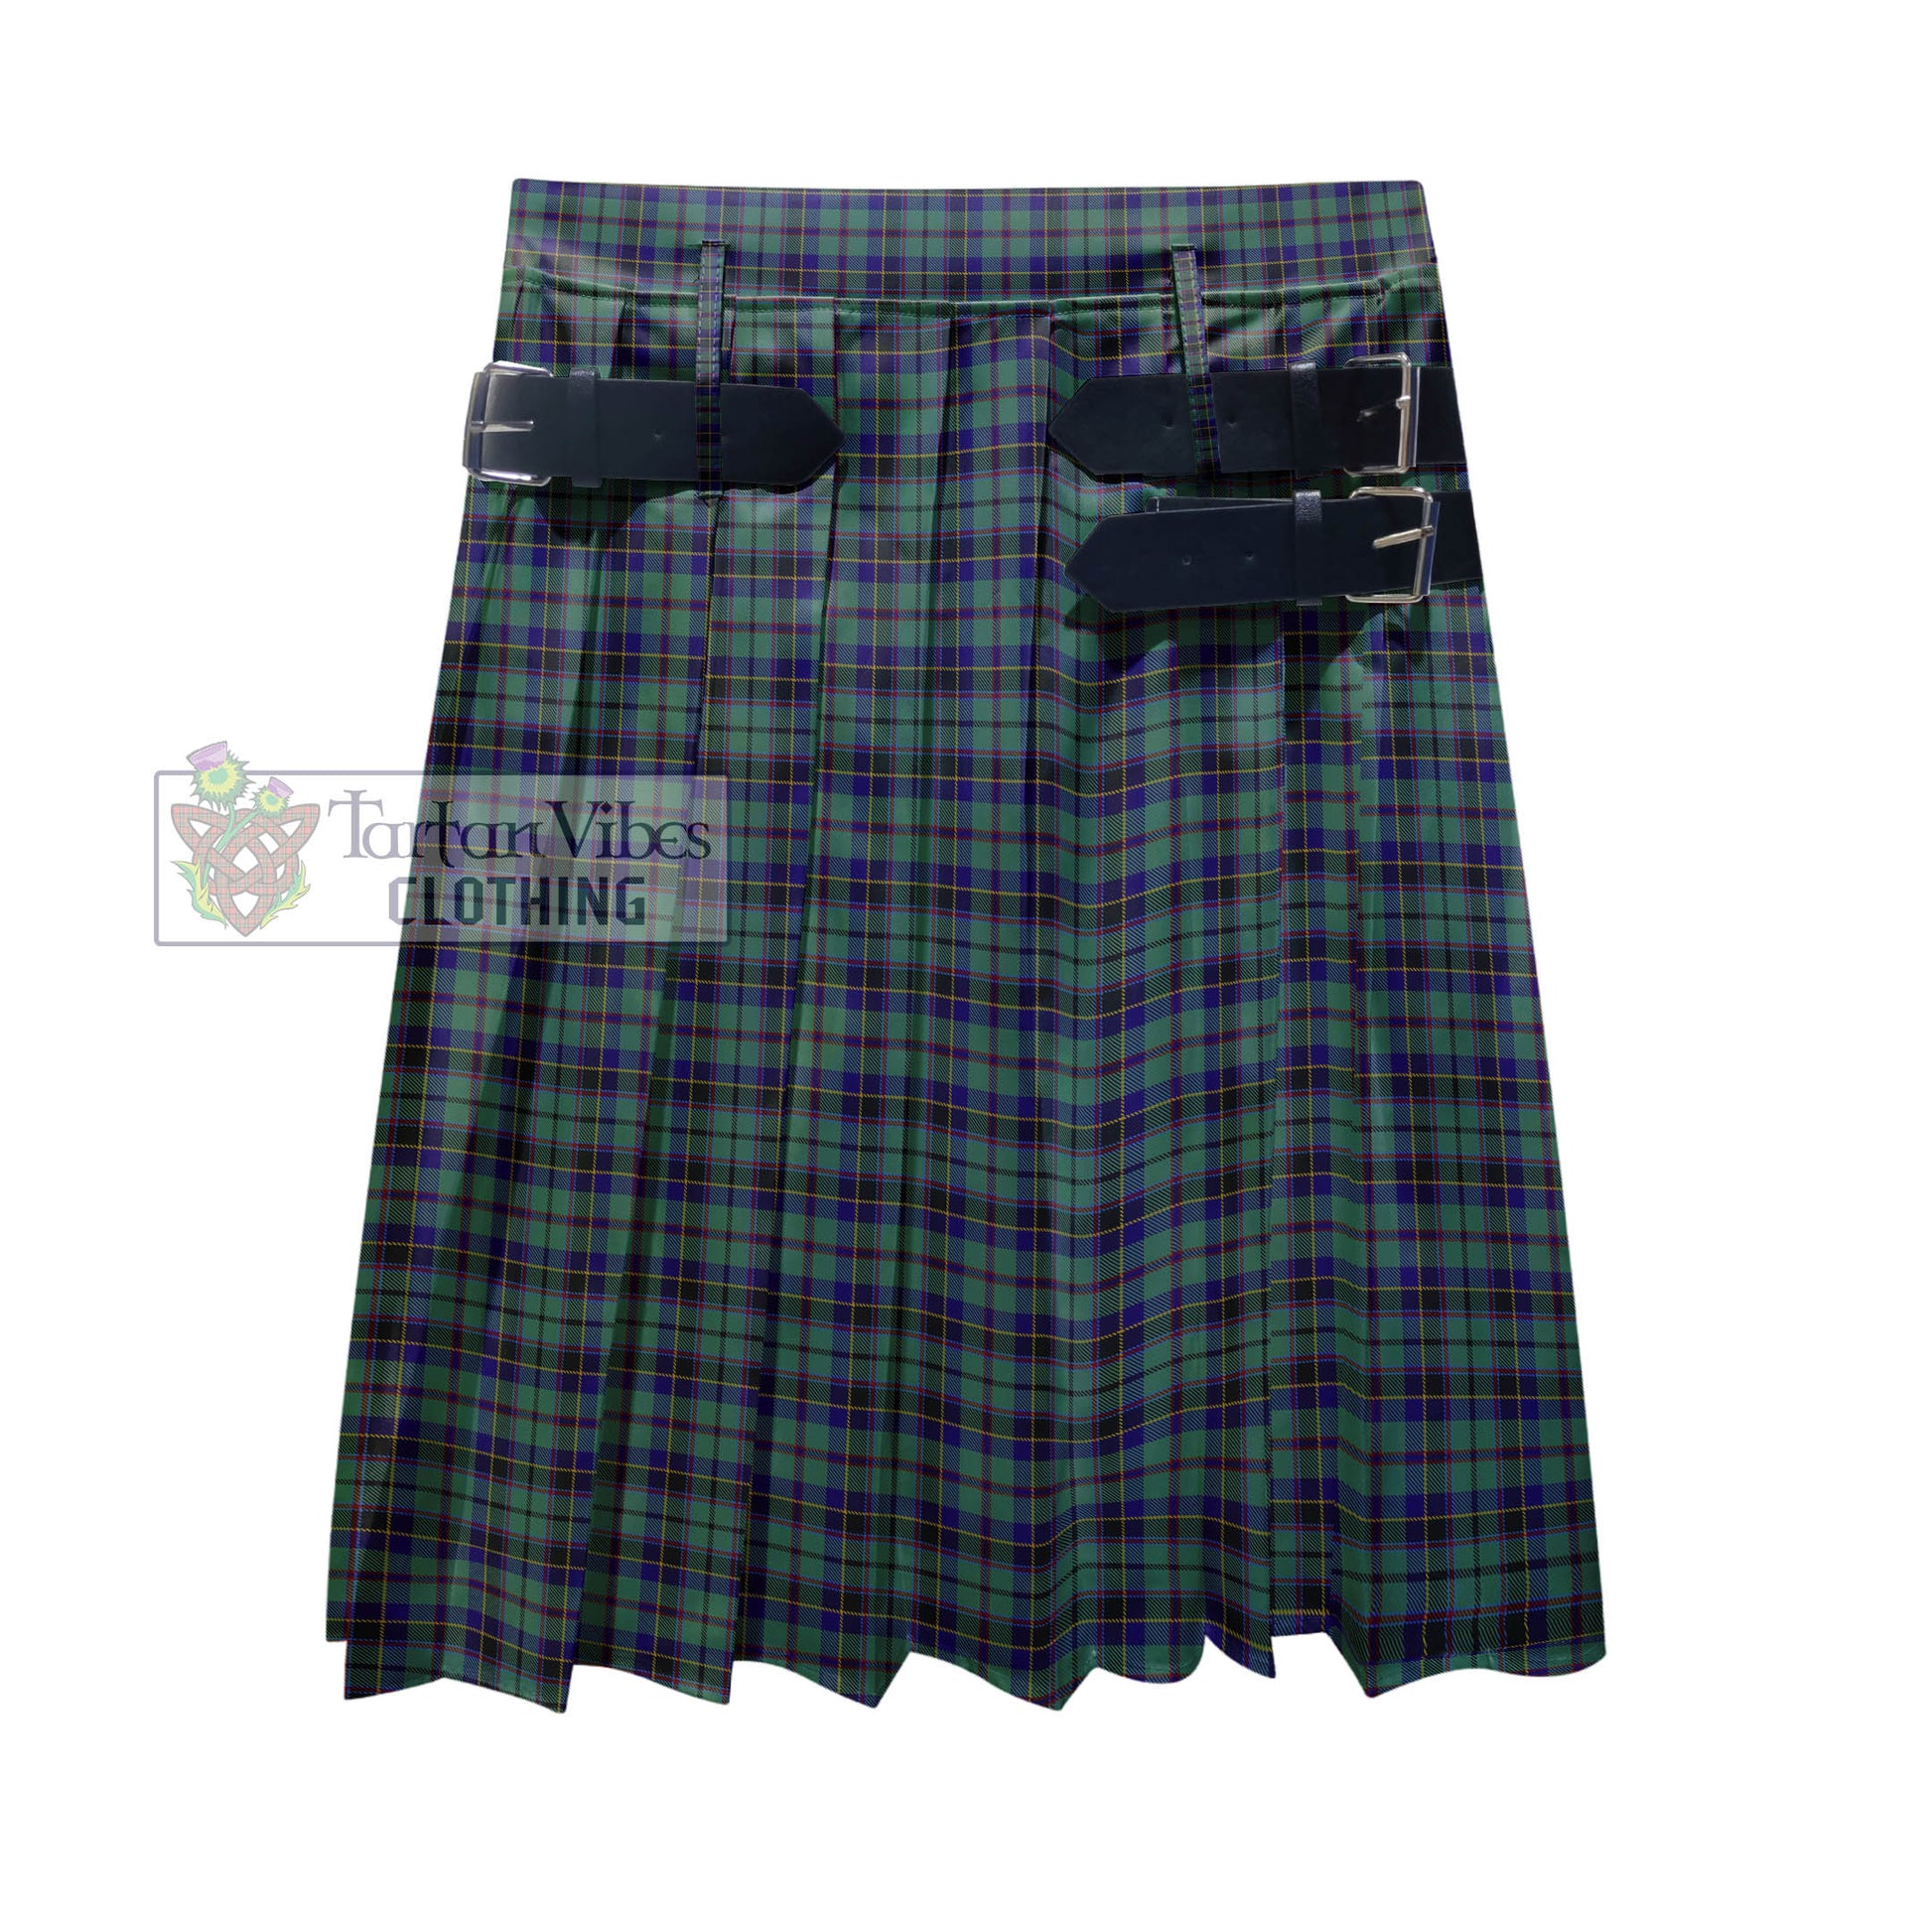 Tartan Vibes Clothing Stephenson Tartan Men's Pleated Skirt - Fashion Casual Retro Scottish Style